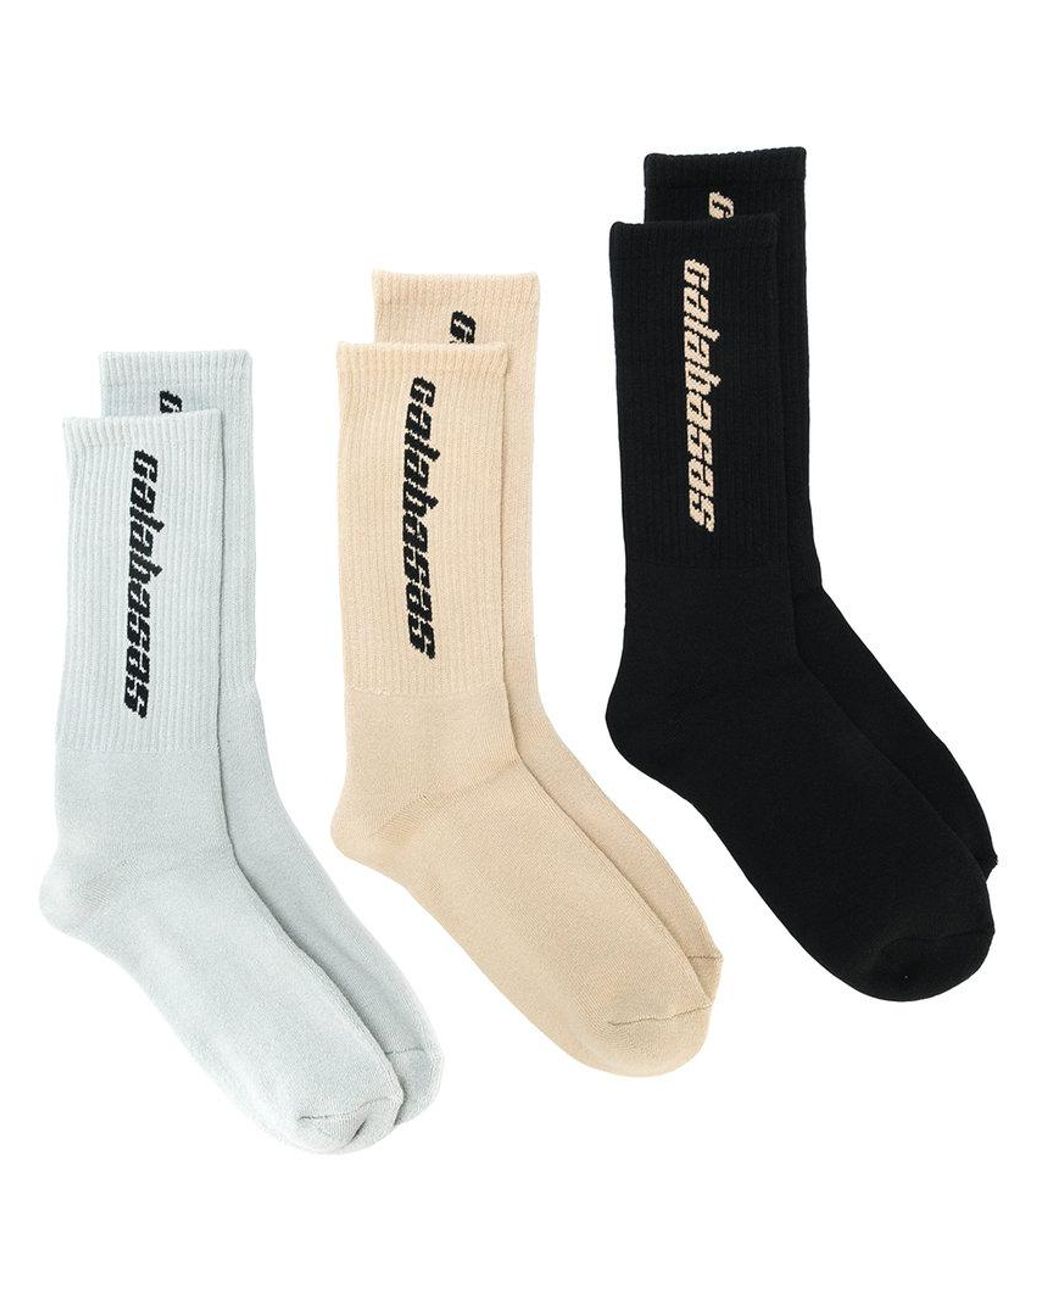 Yeezy Calabasas Socks Set for Men | Lyst